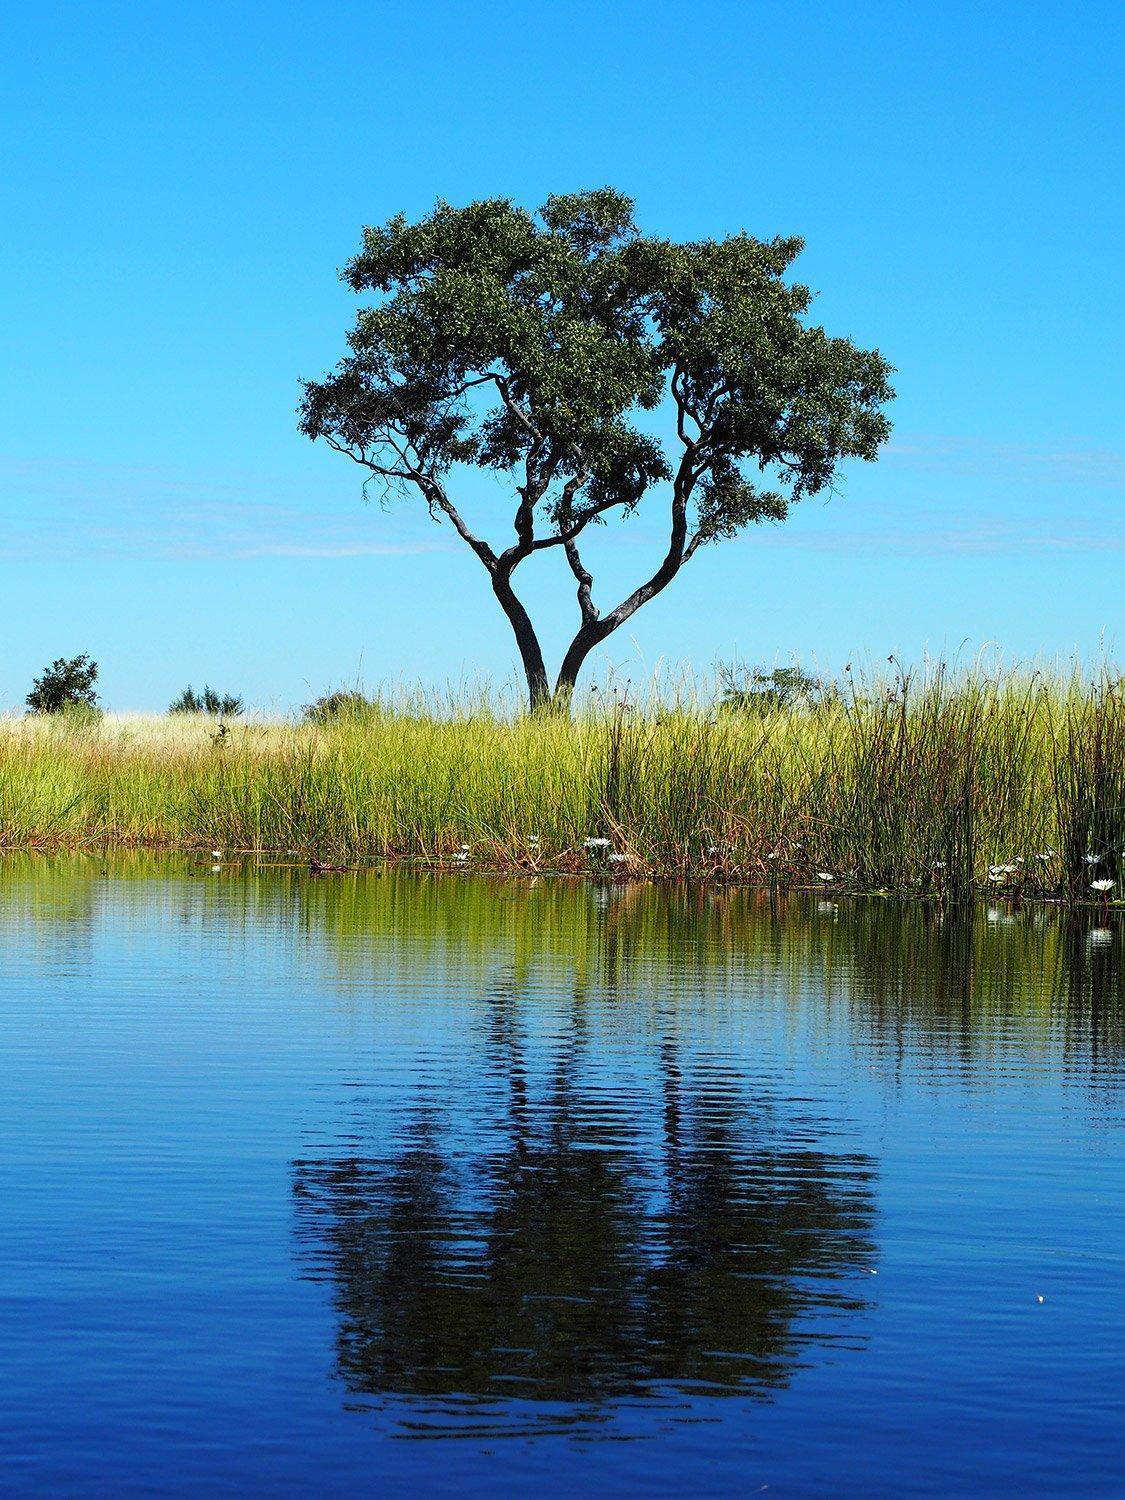 Our swimming hole in Botswana's Okavango Delta